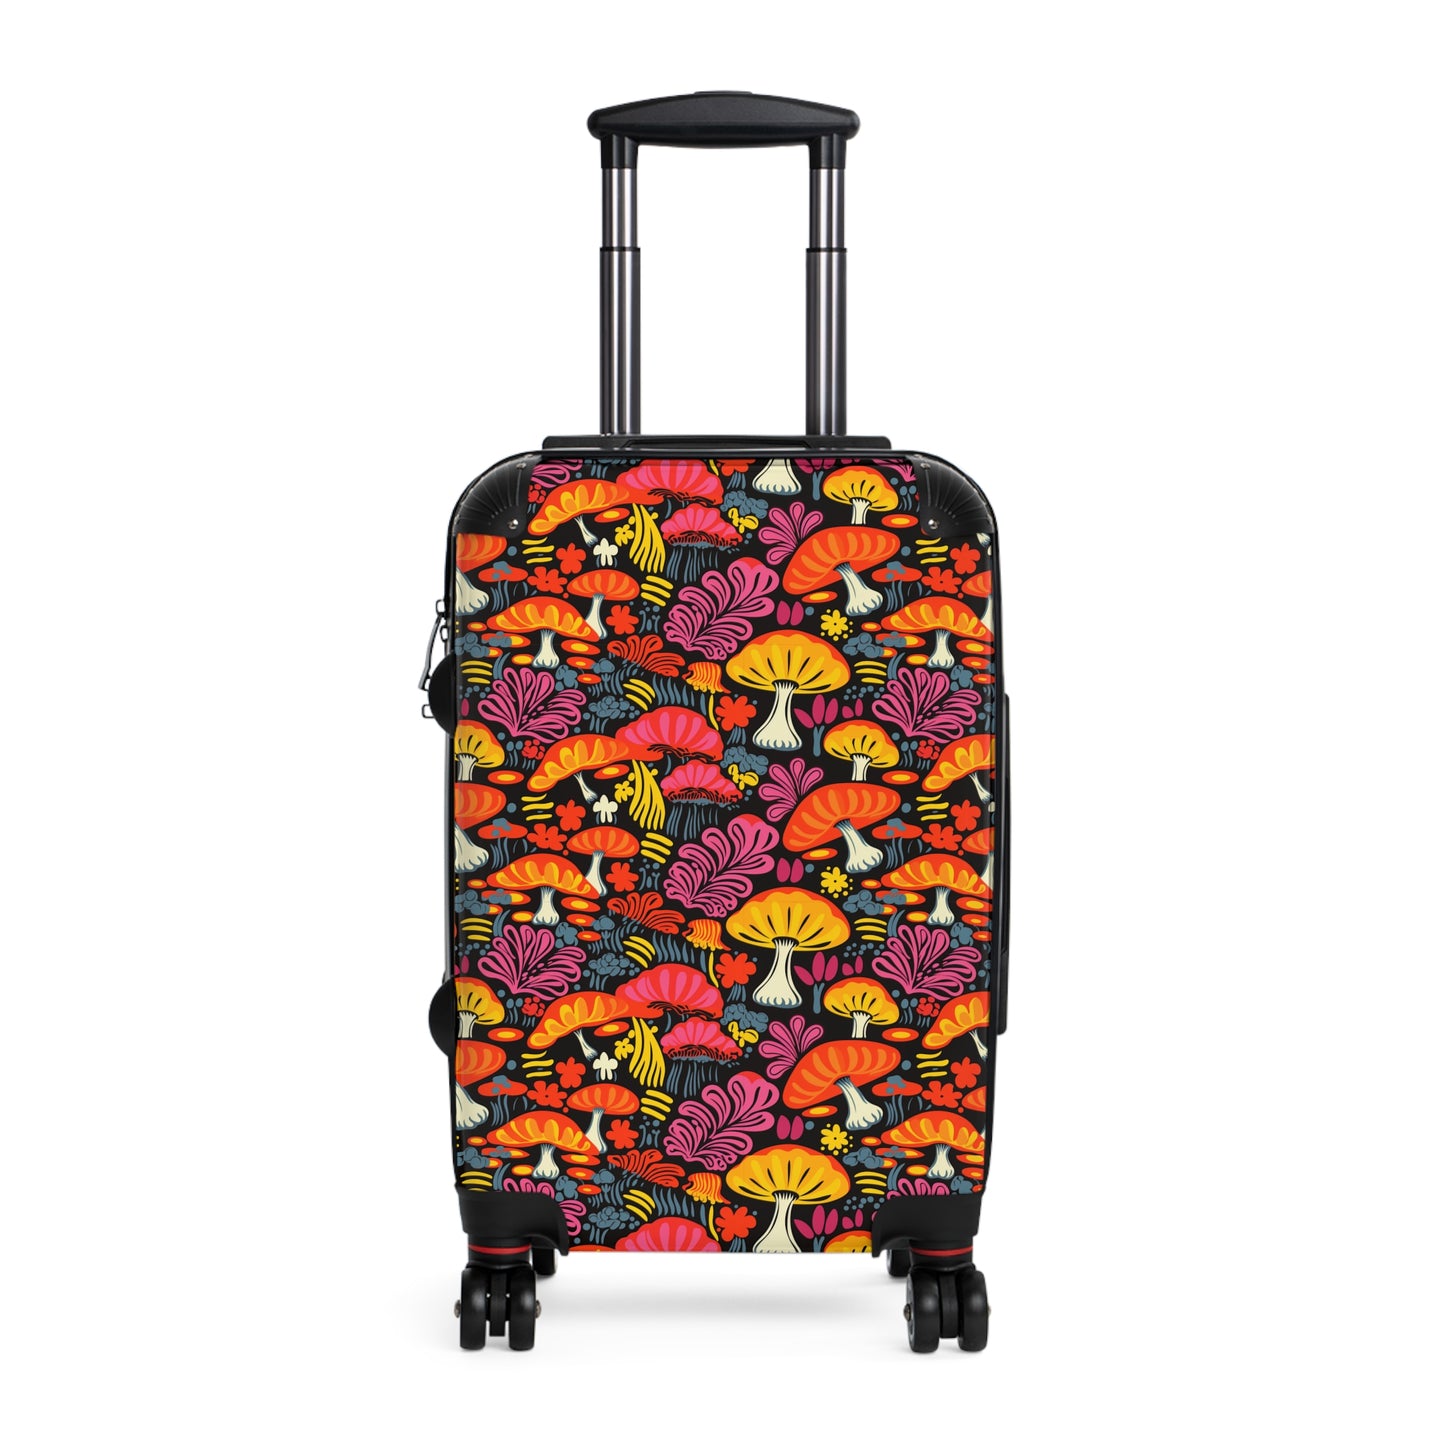 Vintage Mushrooms Stylish & Unique Hard-Shell Suitcase: Durable, Lightweight, Expandable Luggage with 360° Swivel Wheels & Secure Lock for Fashion-Forward Travelers, Free US Shipping